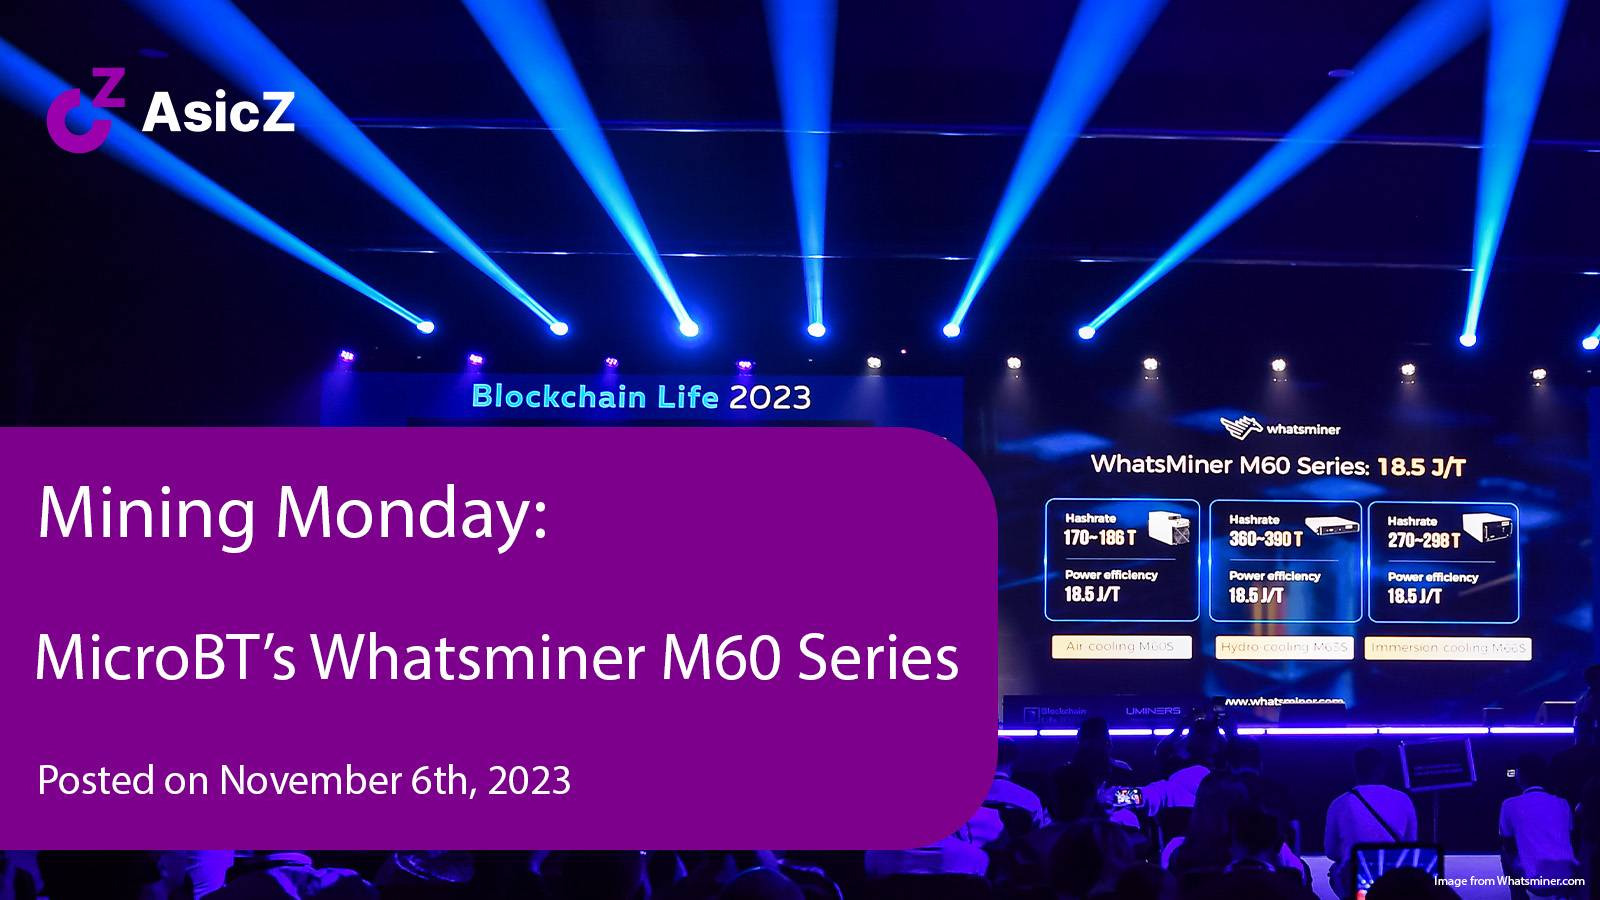 Mining Monday: MicroBT’s Whatsminer M60 Series